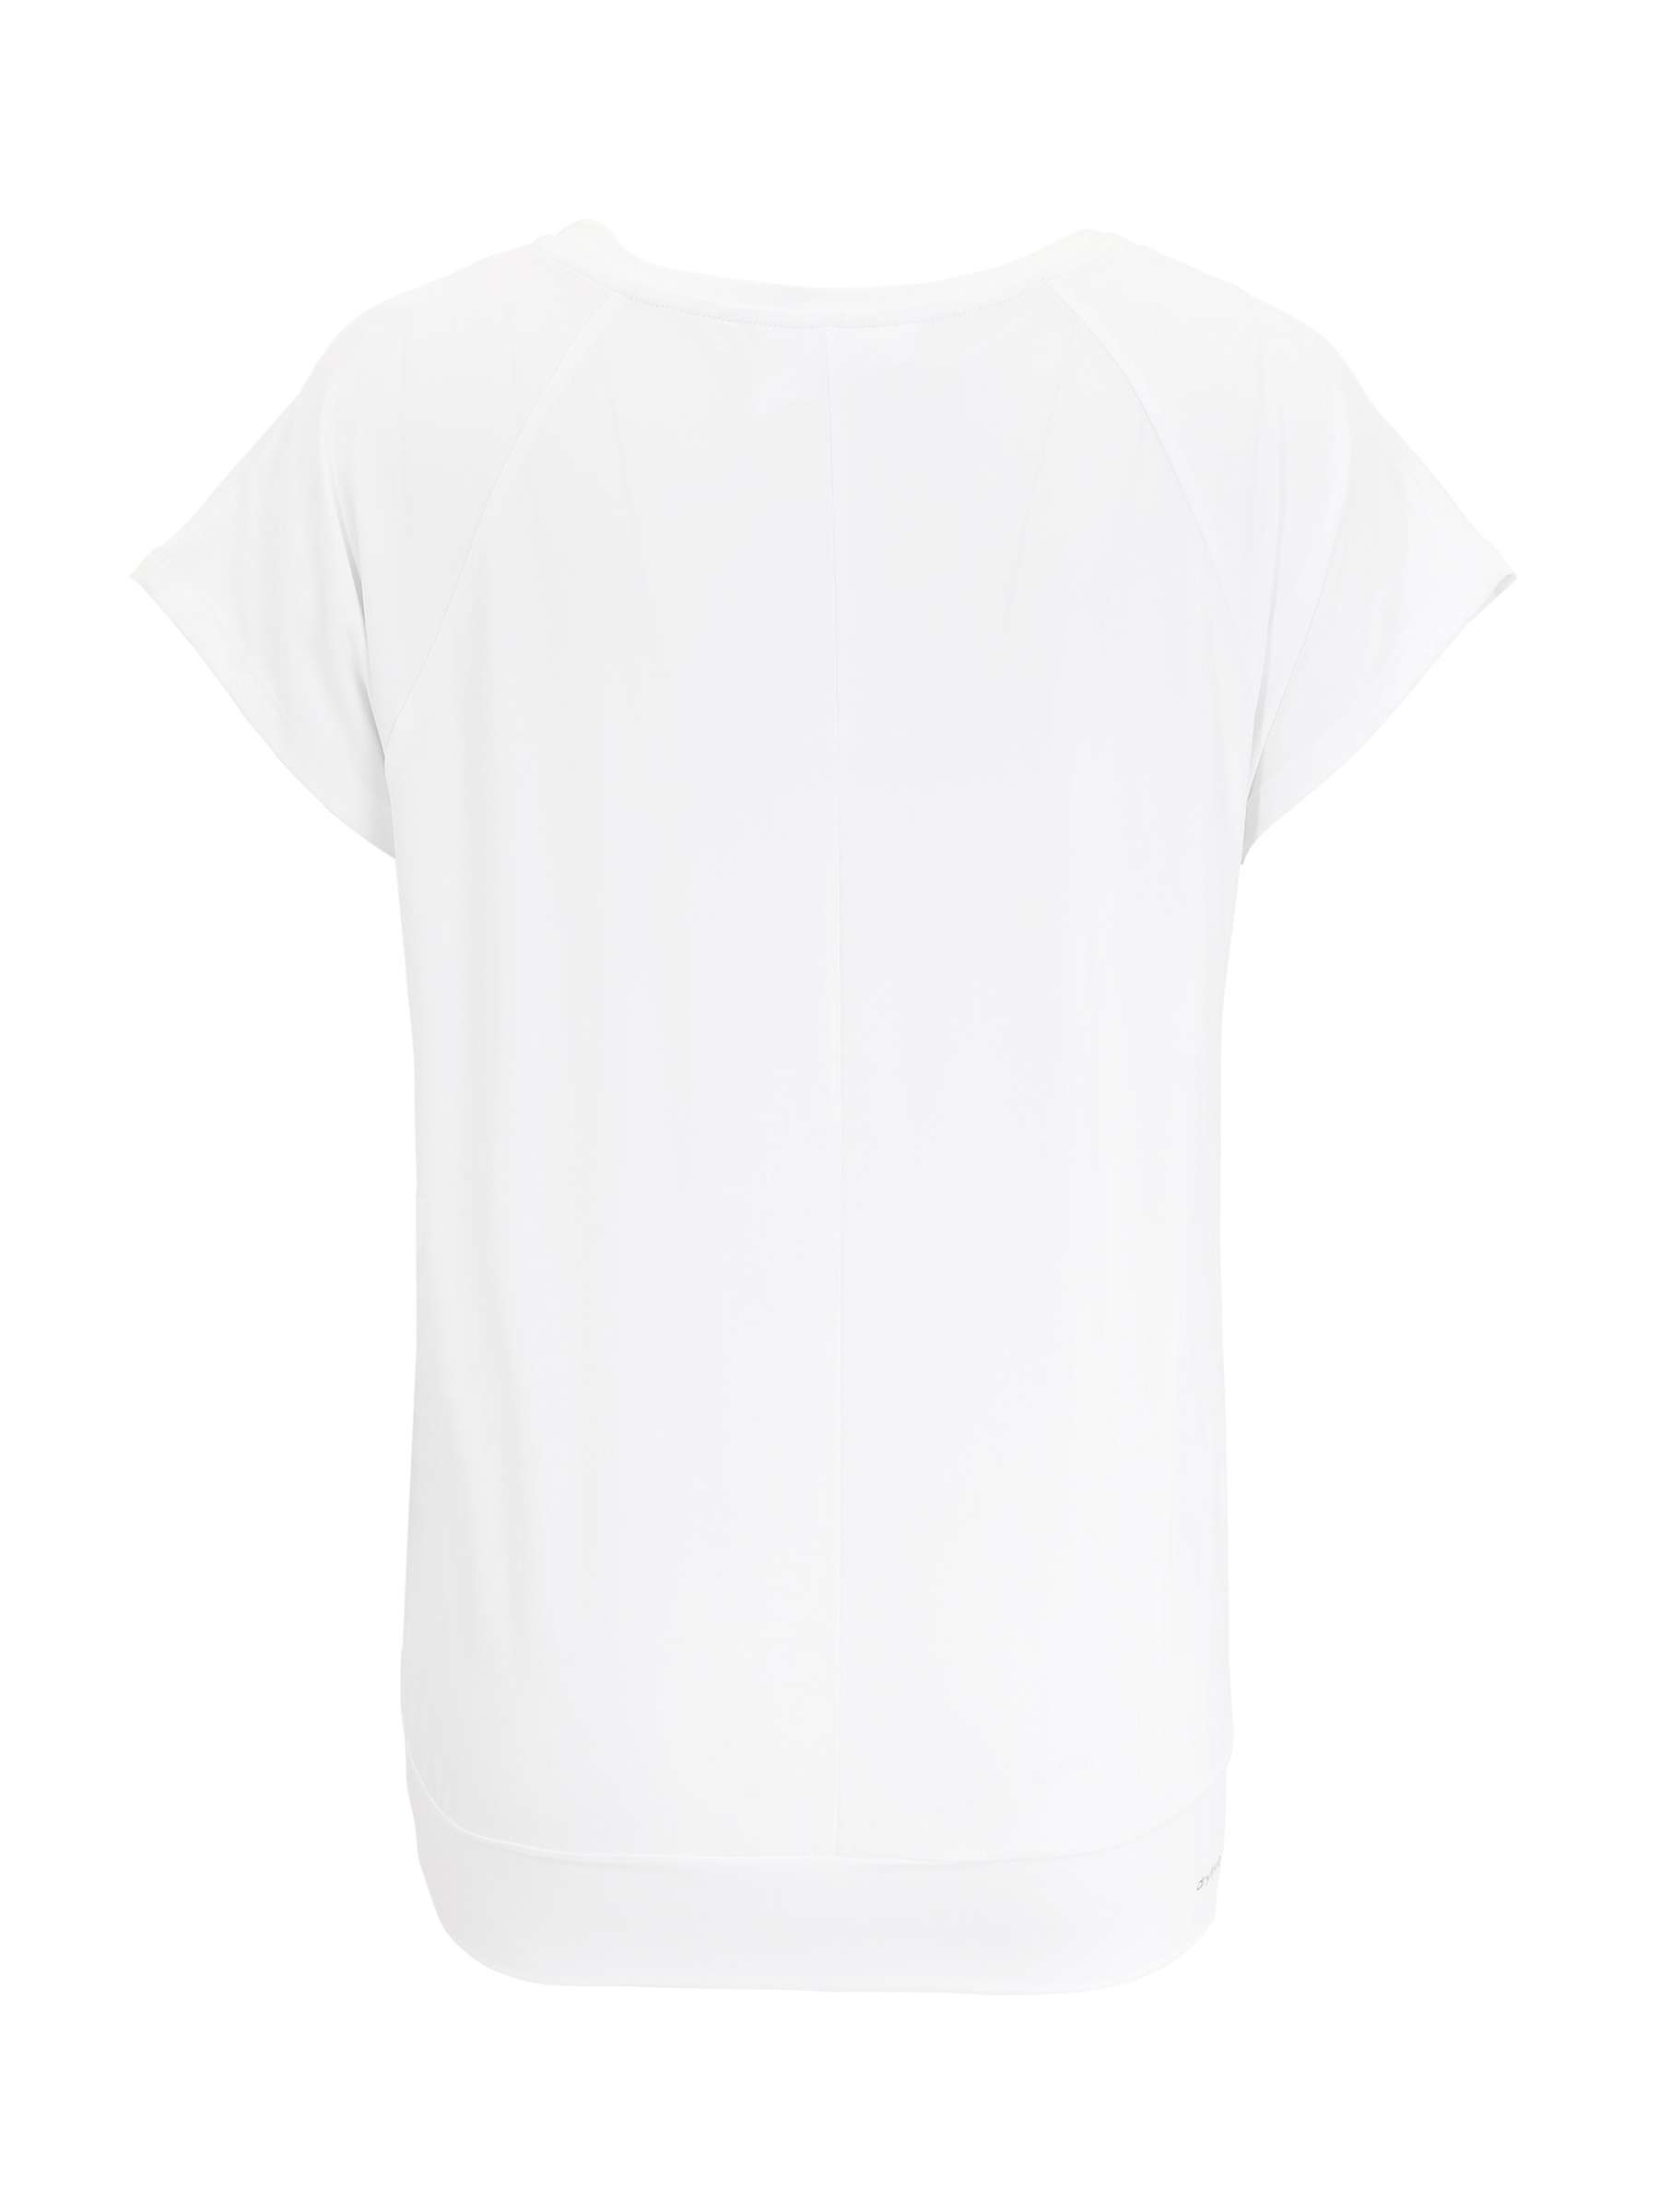 Buy Venice Beach Nobel T-Shirt, White Online at johnlewis.com